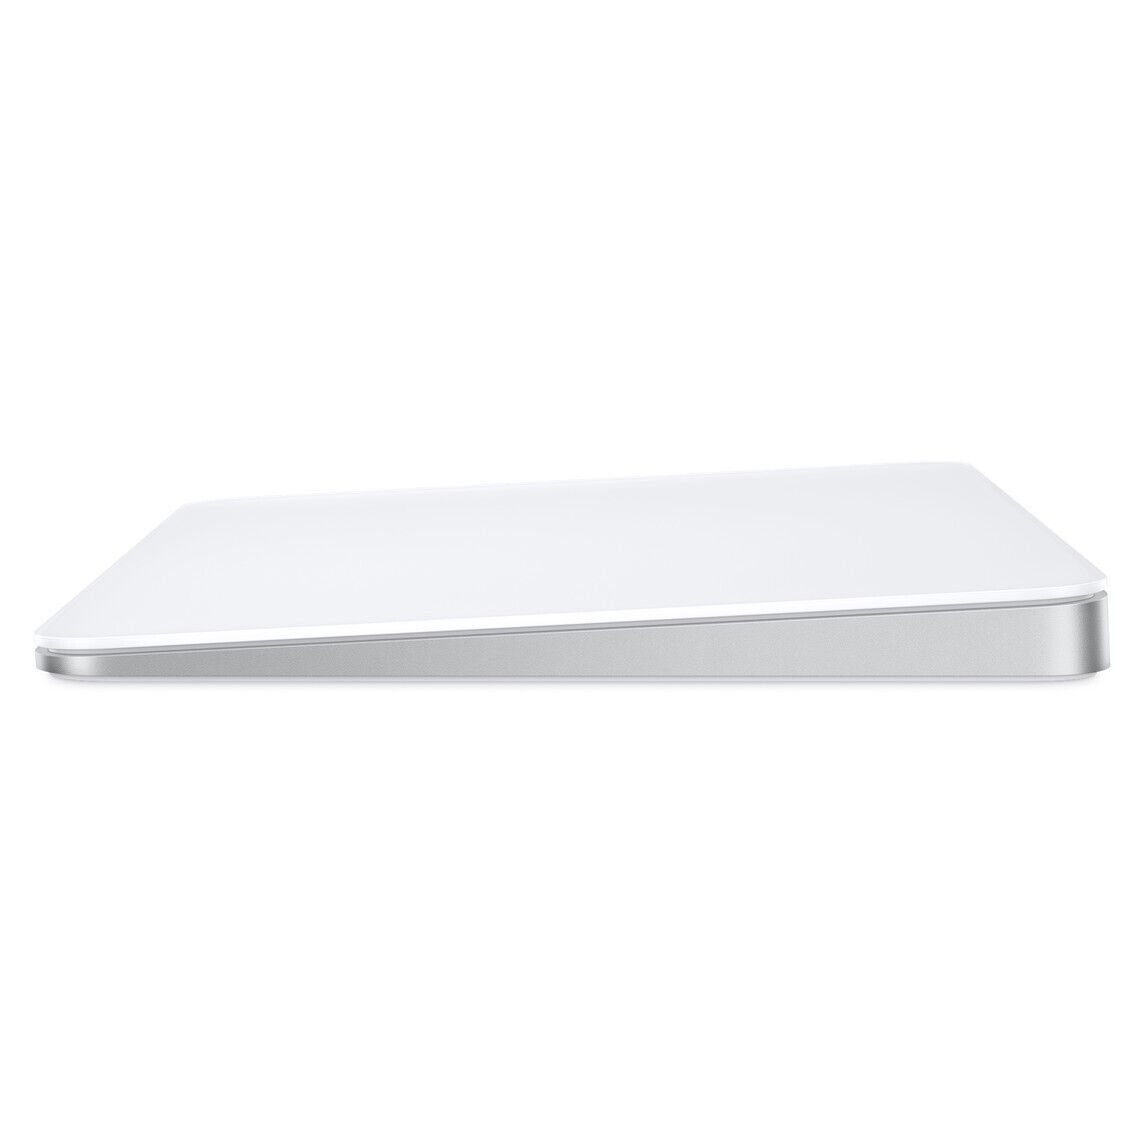 Apple Magic Trackpad 2 Bluetooth Wireless - White